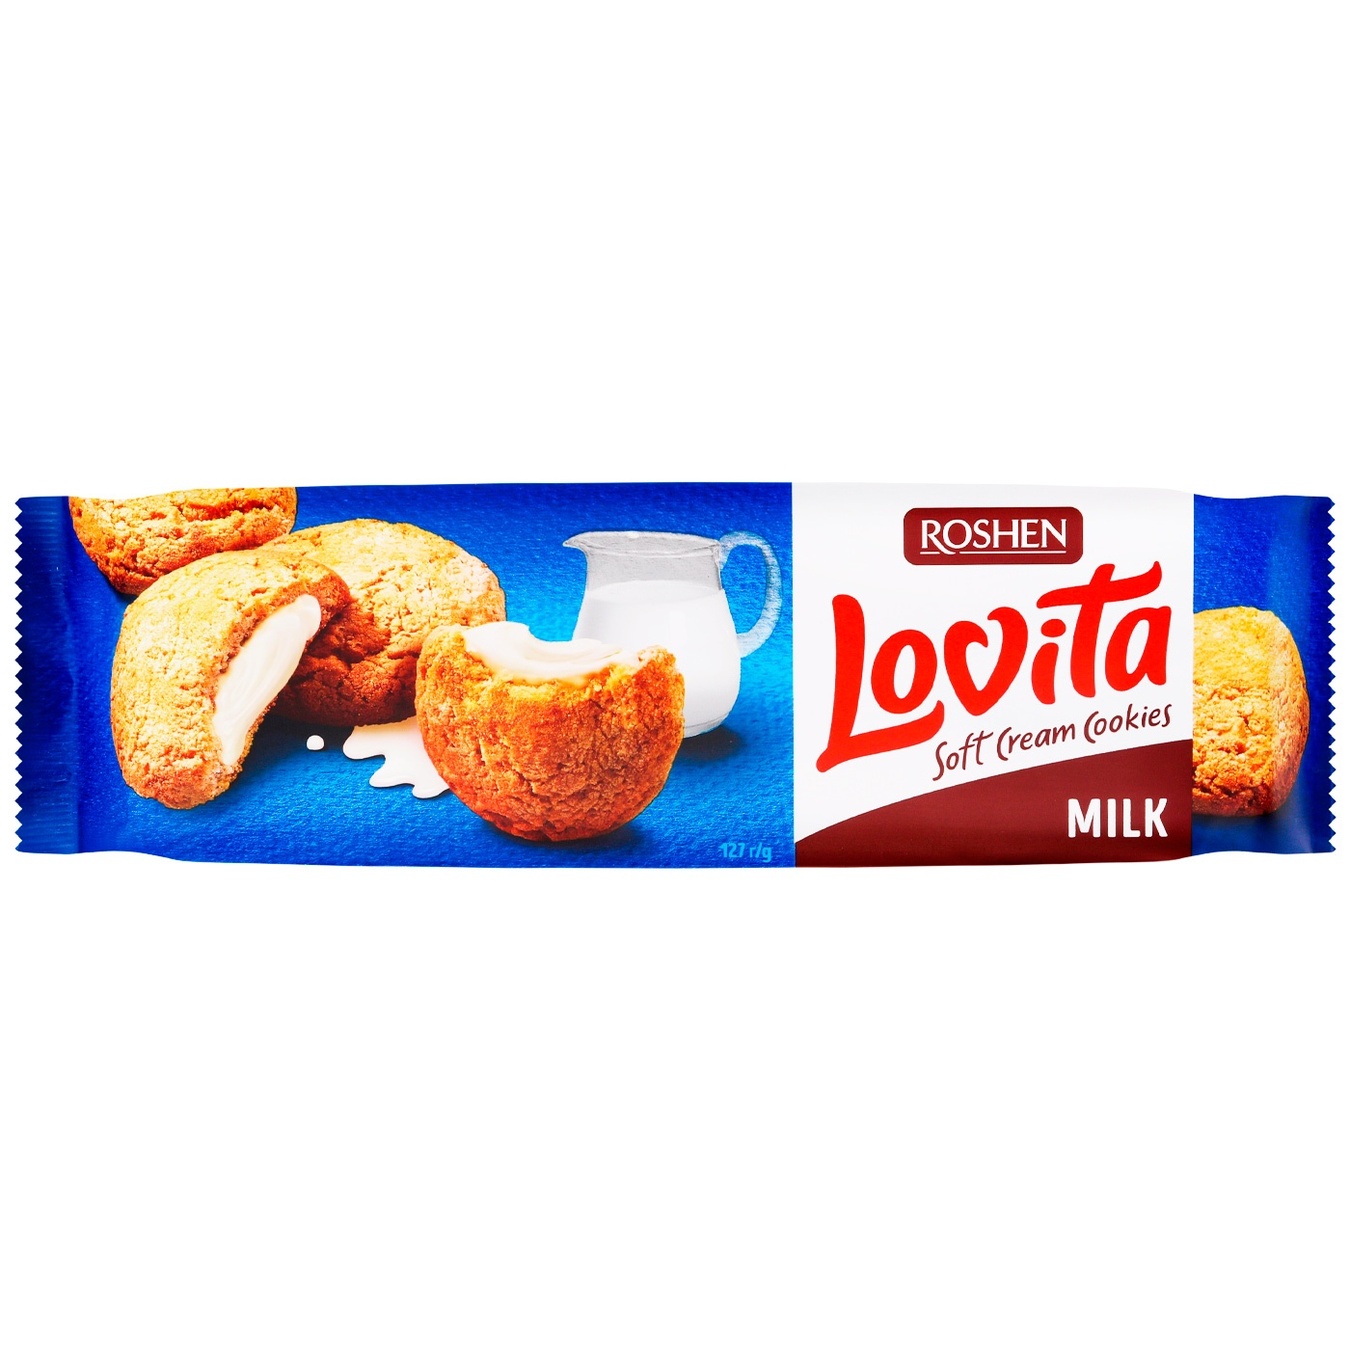 Печенье Roshen Lovita Soft Cream с молочной начинкой 170г